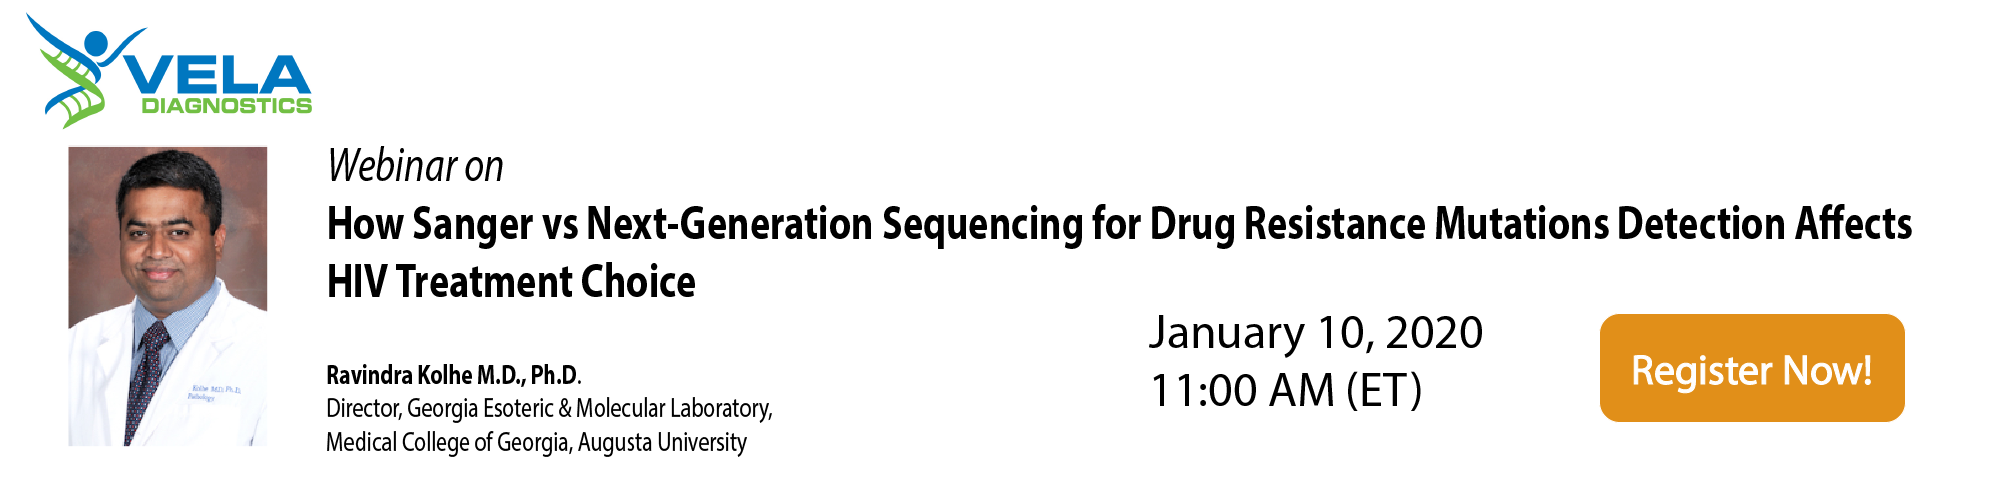 How Sanger vs Next-Generation Sequencing for Drug Resistance Mutations Detection